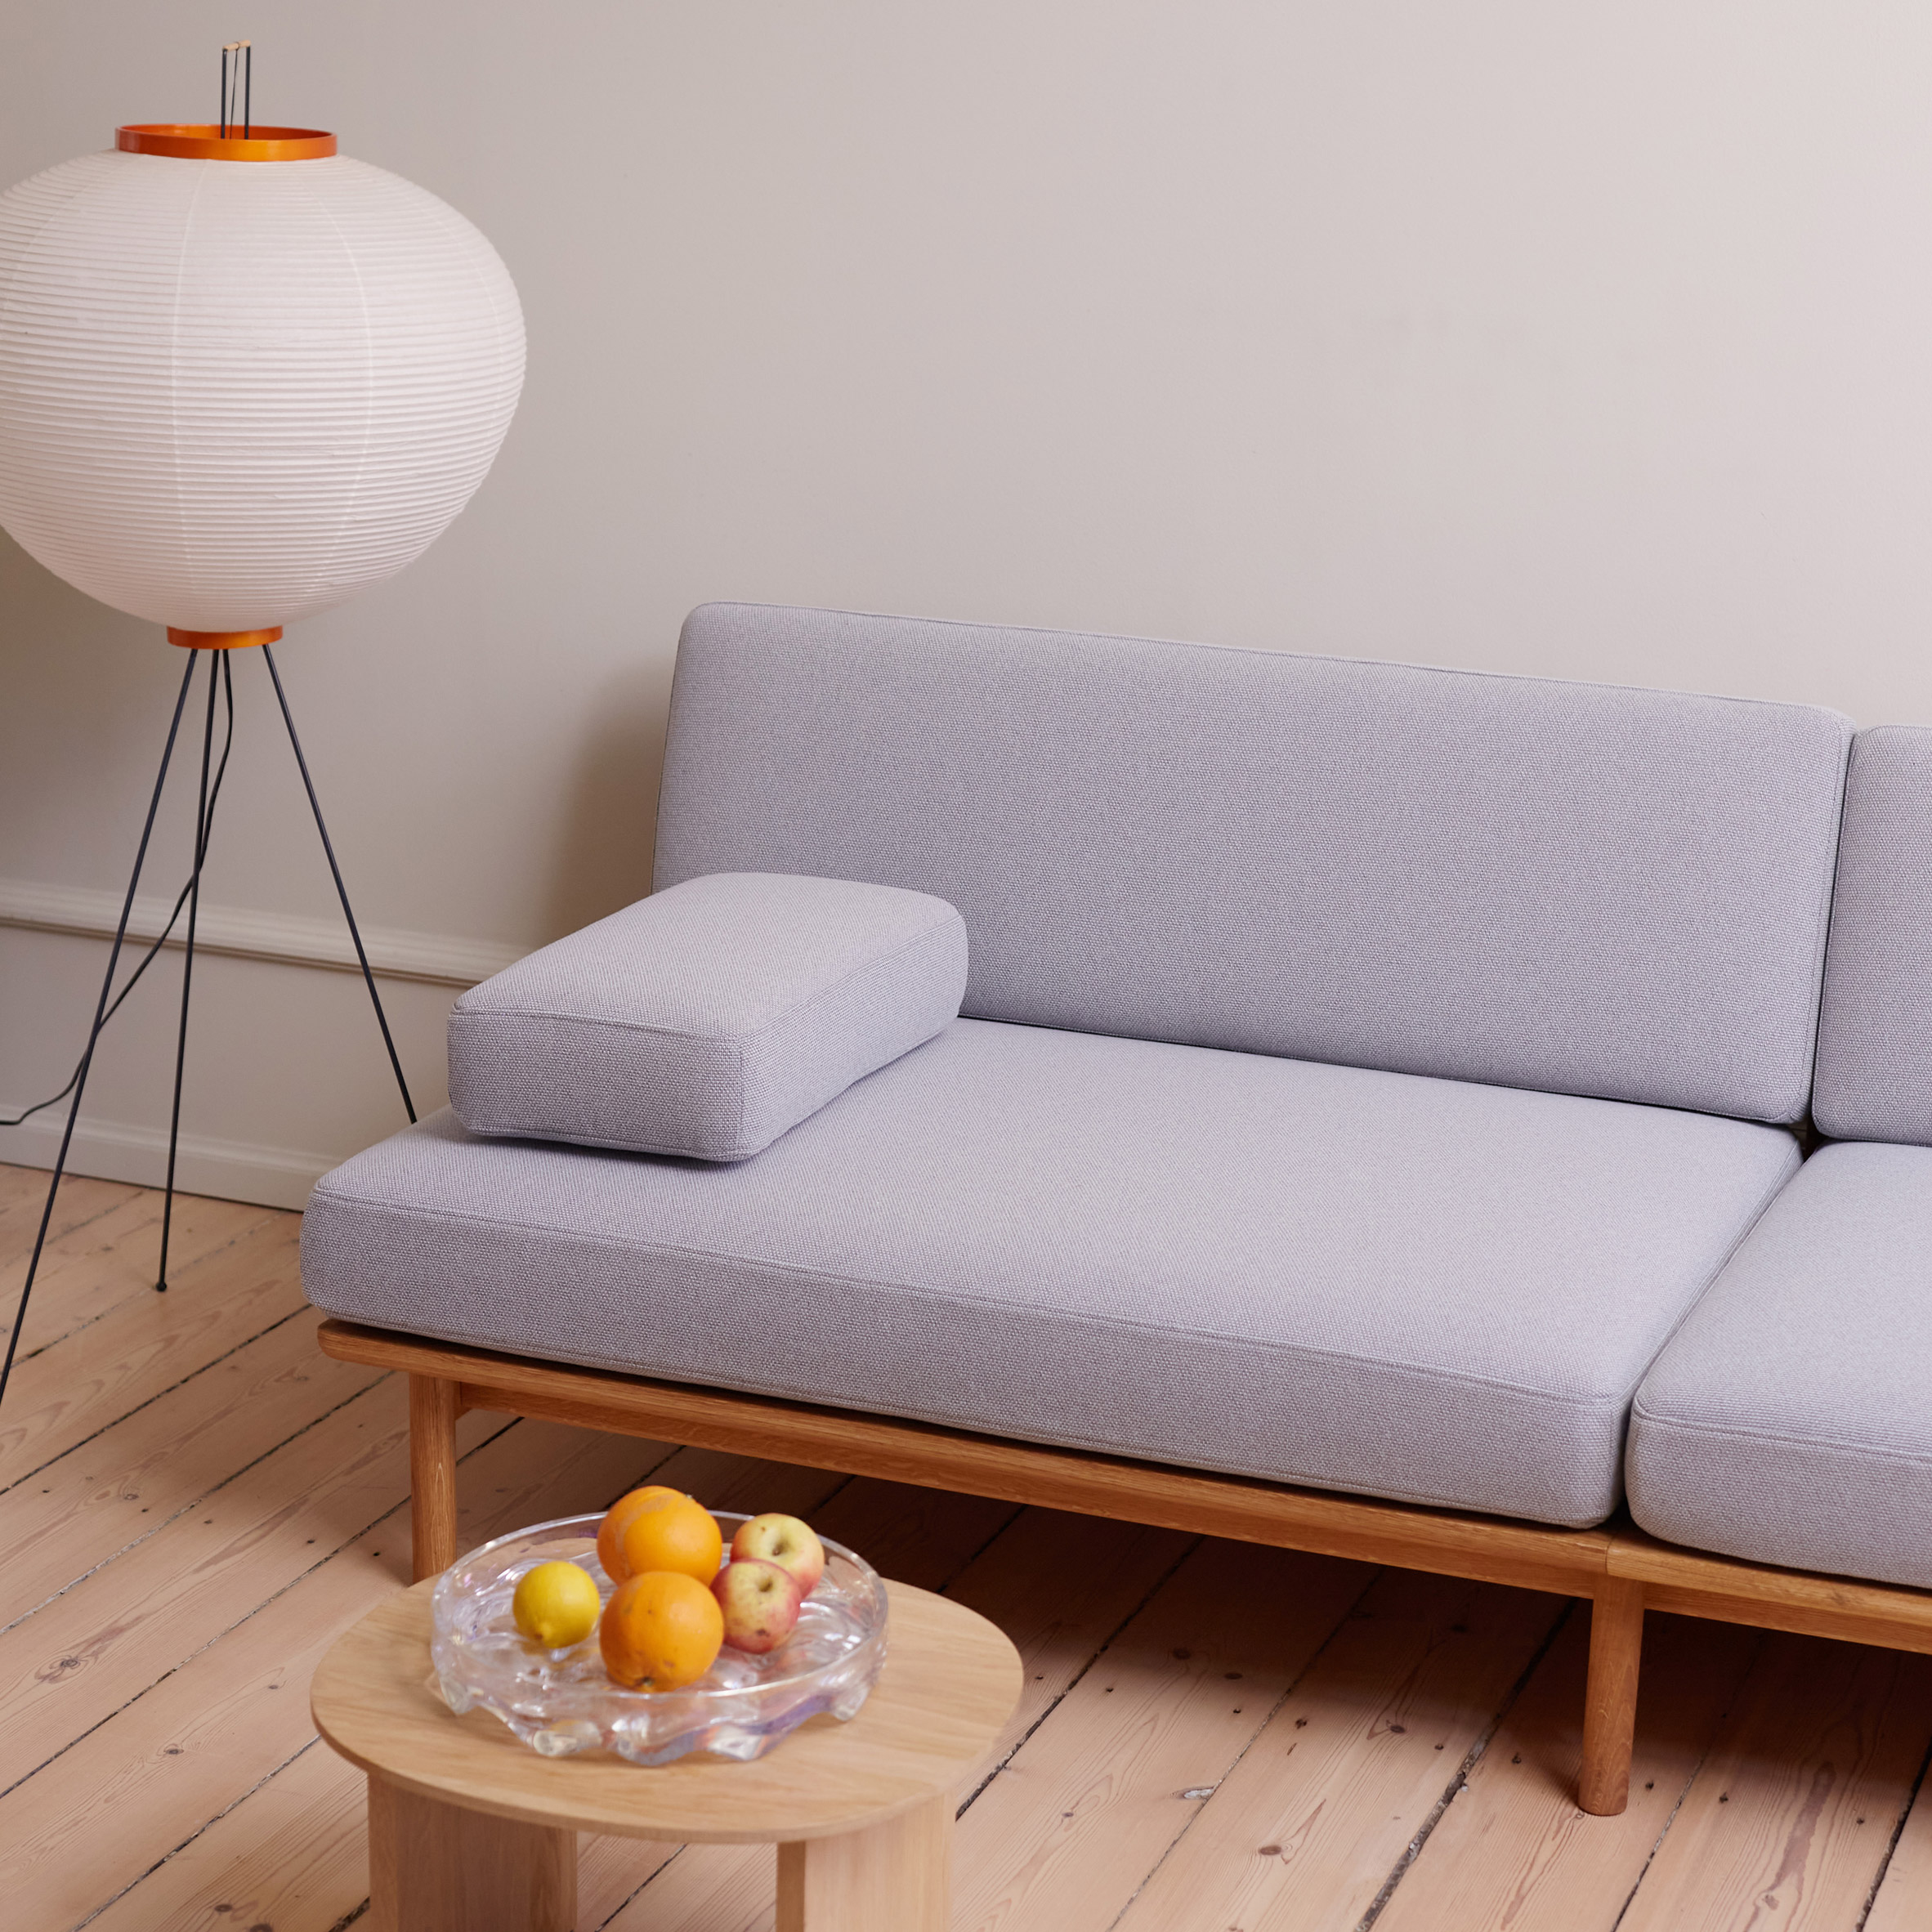 Takt Creates Flat Pack Sofa That Is